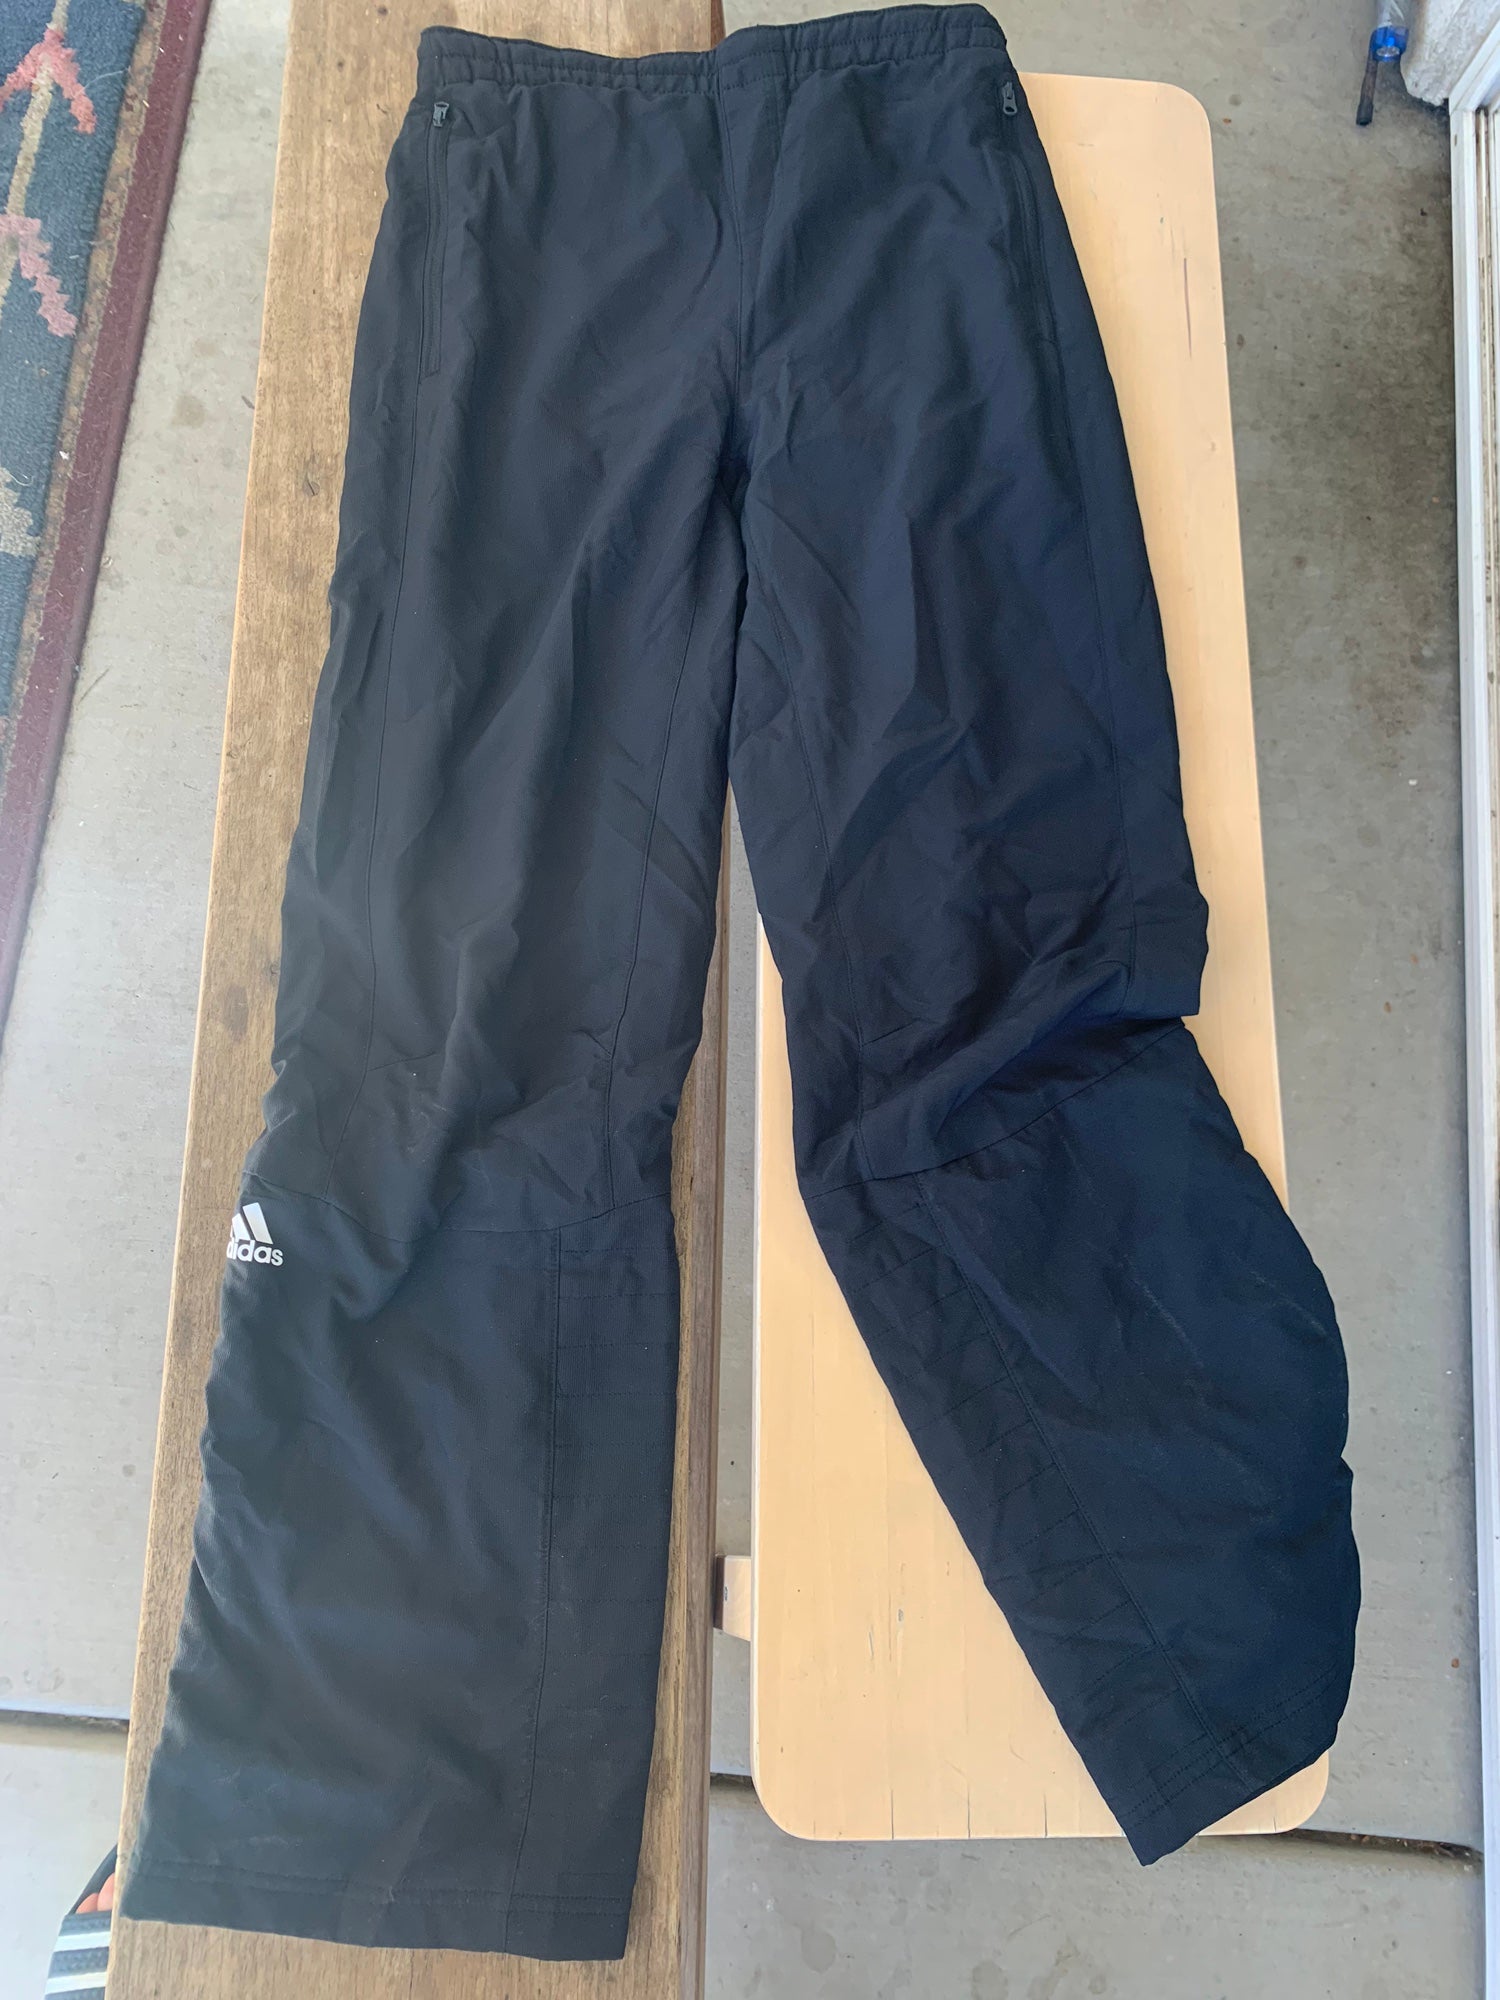 medium black Zyia Active leggings with mesh on - Depop